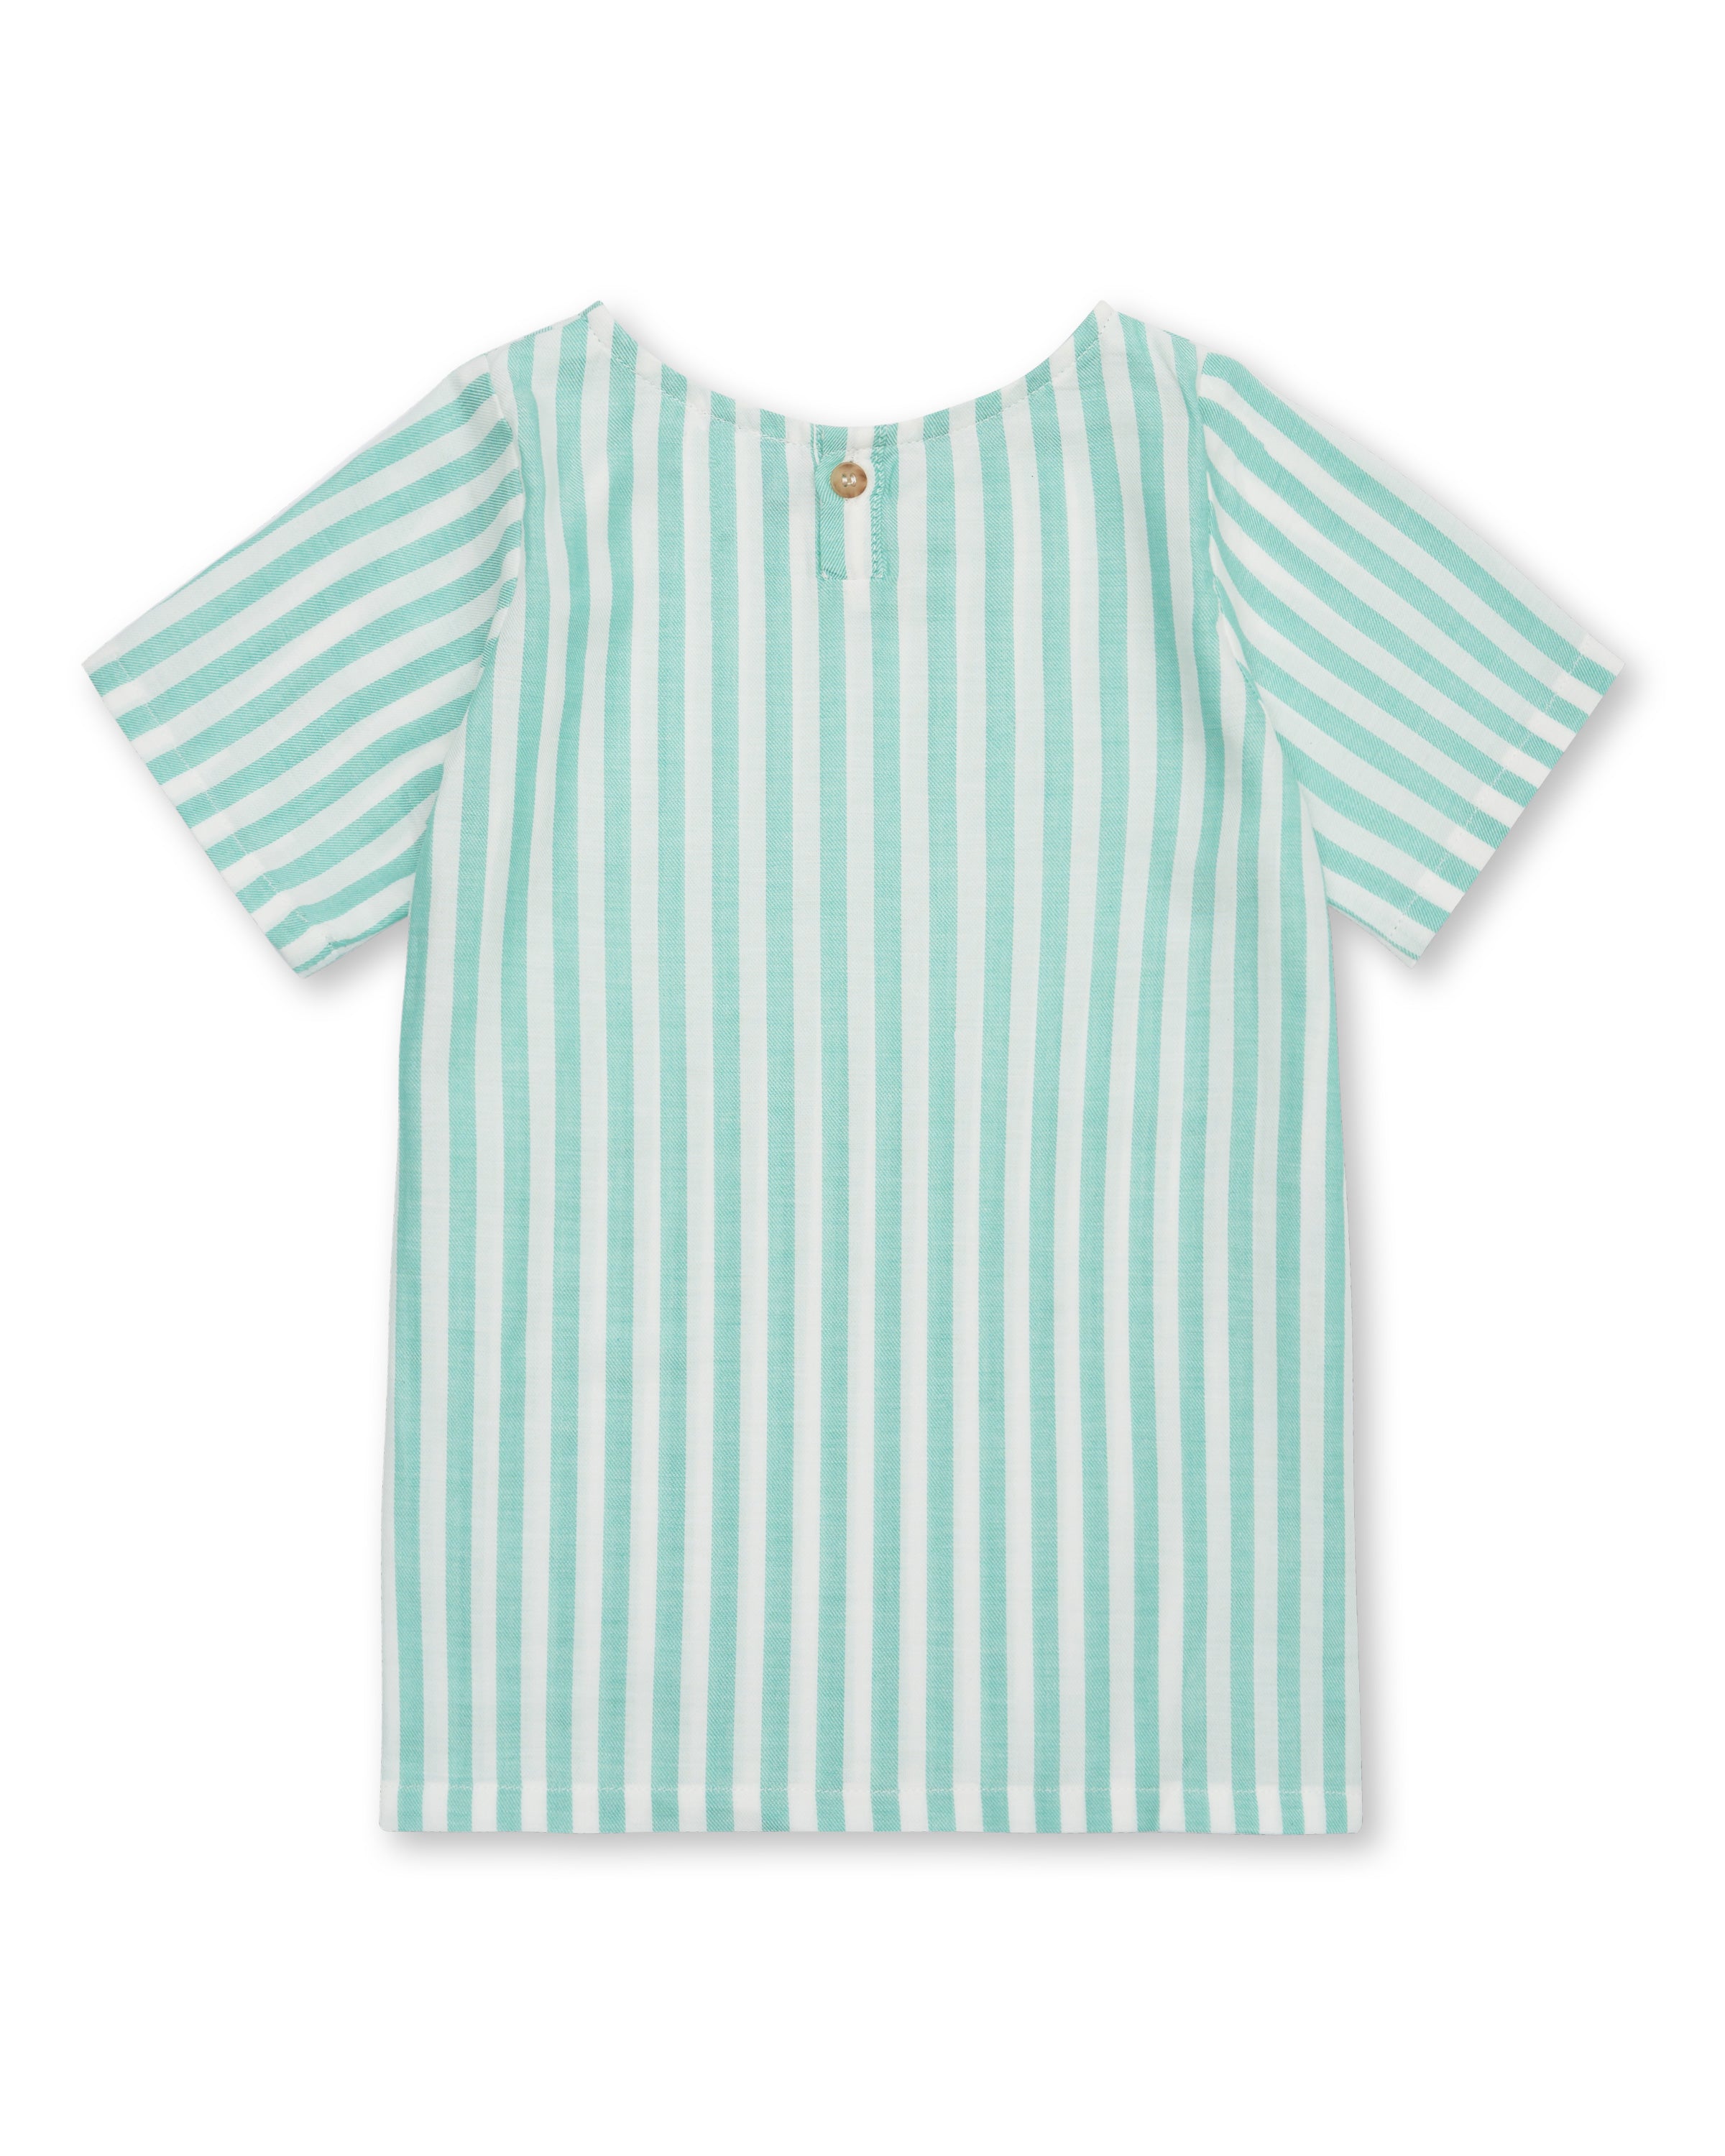 Boys' Designer Shirt, Green Stripe, ages 1 to 6.